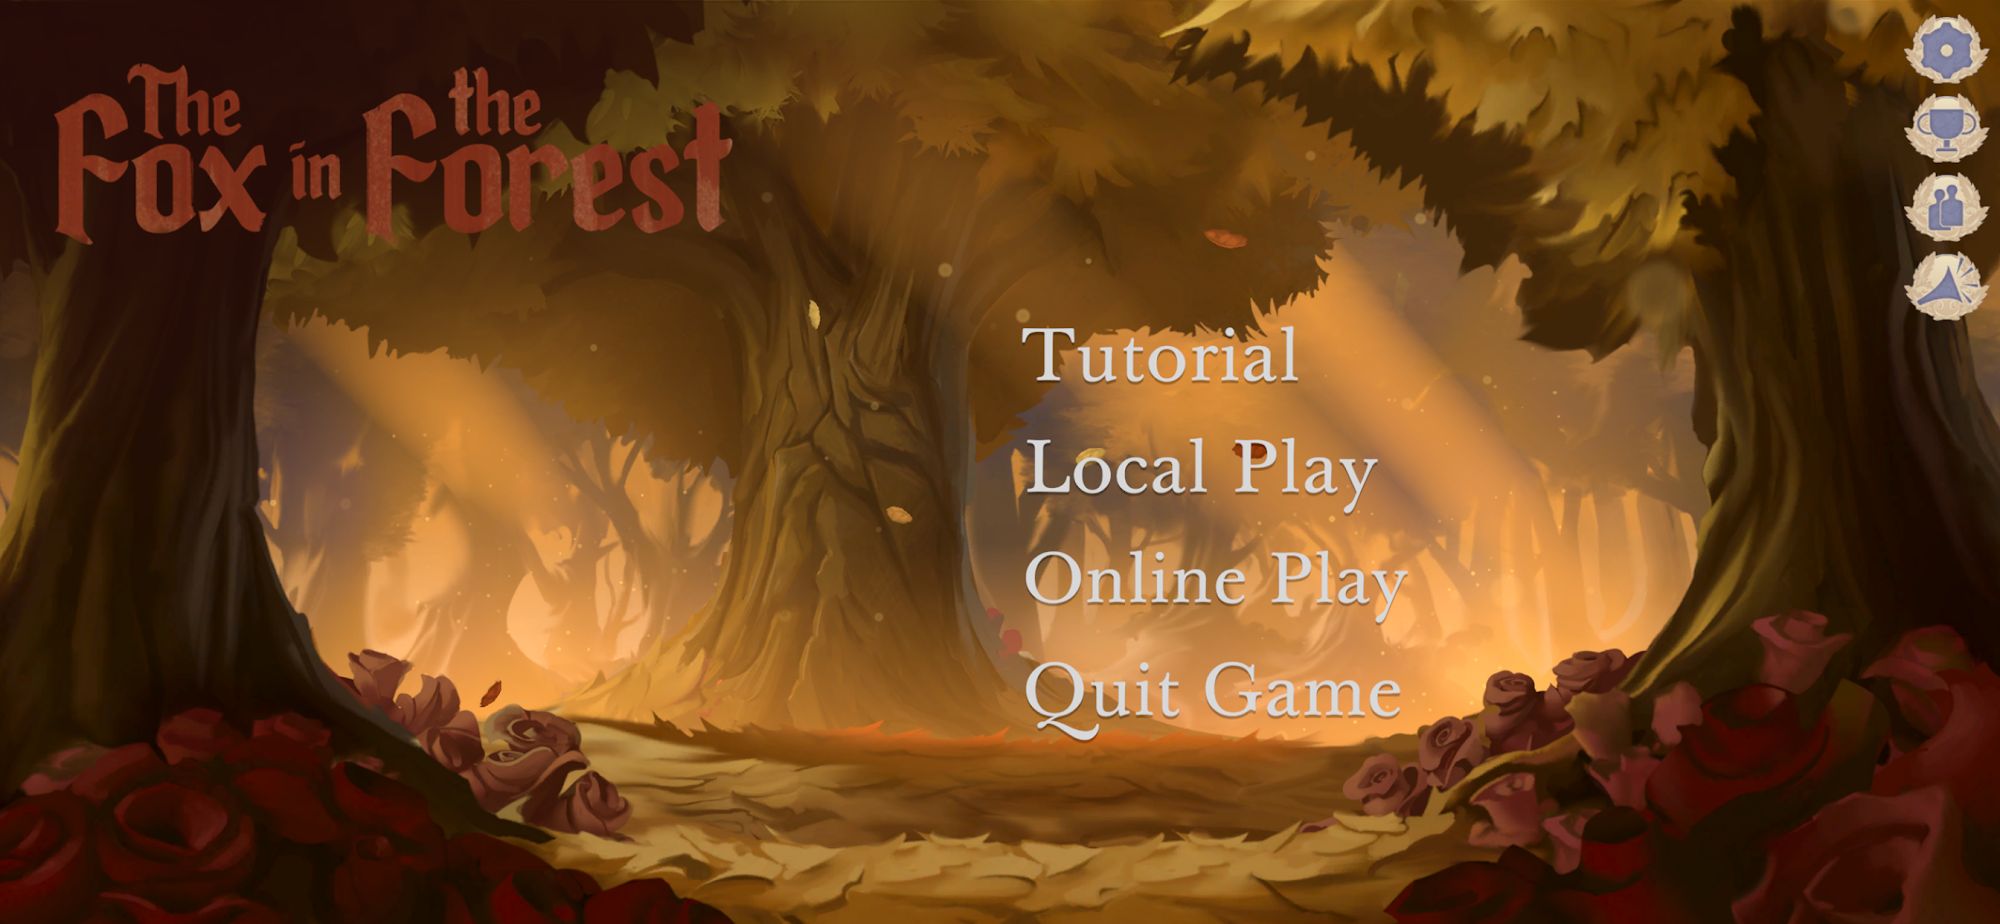 Download The Fox in the Forest für Android kostenlos.